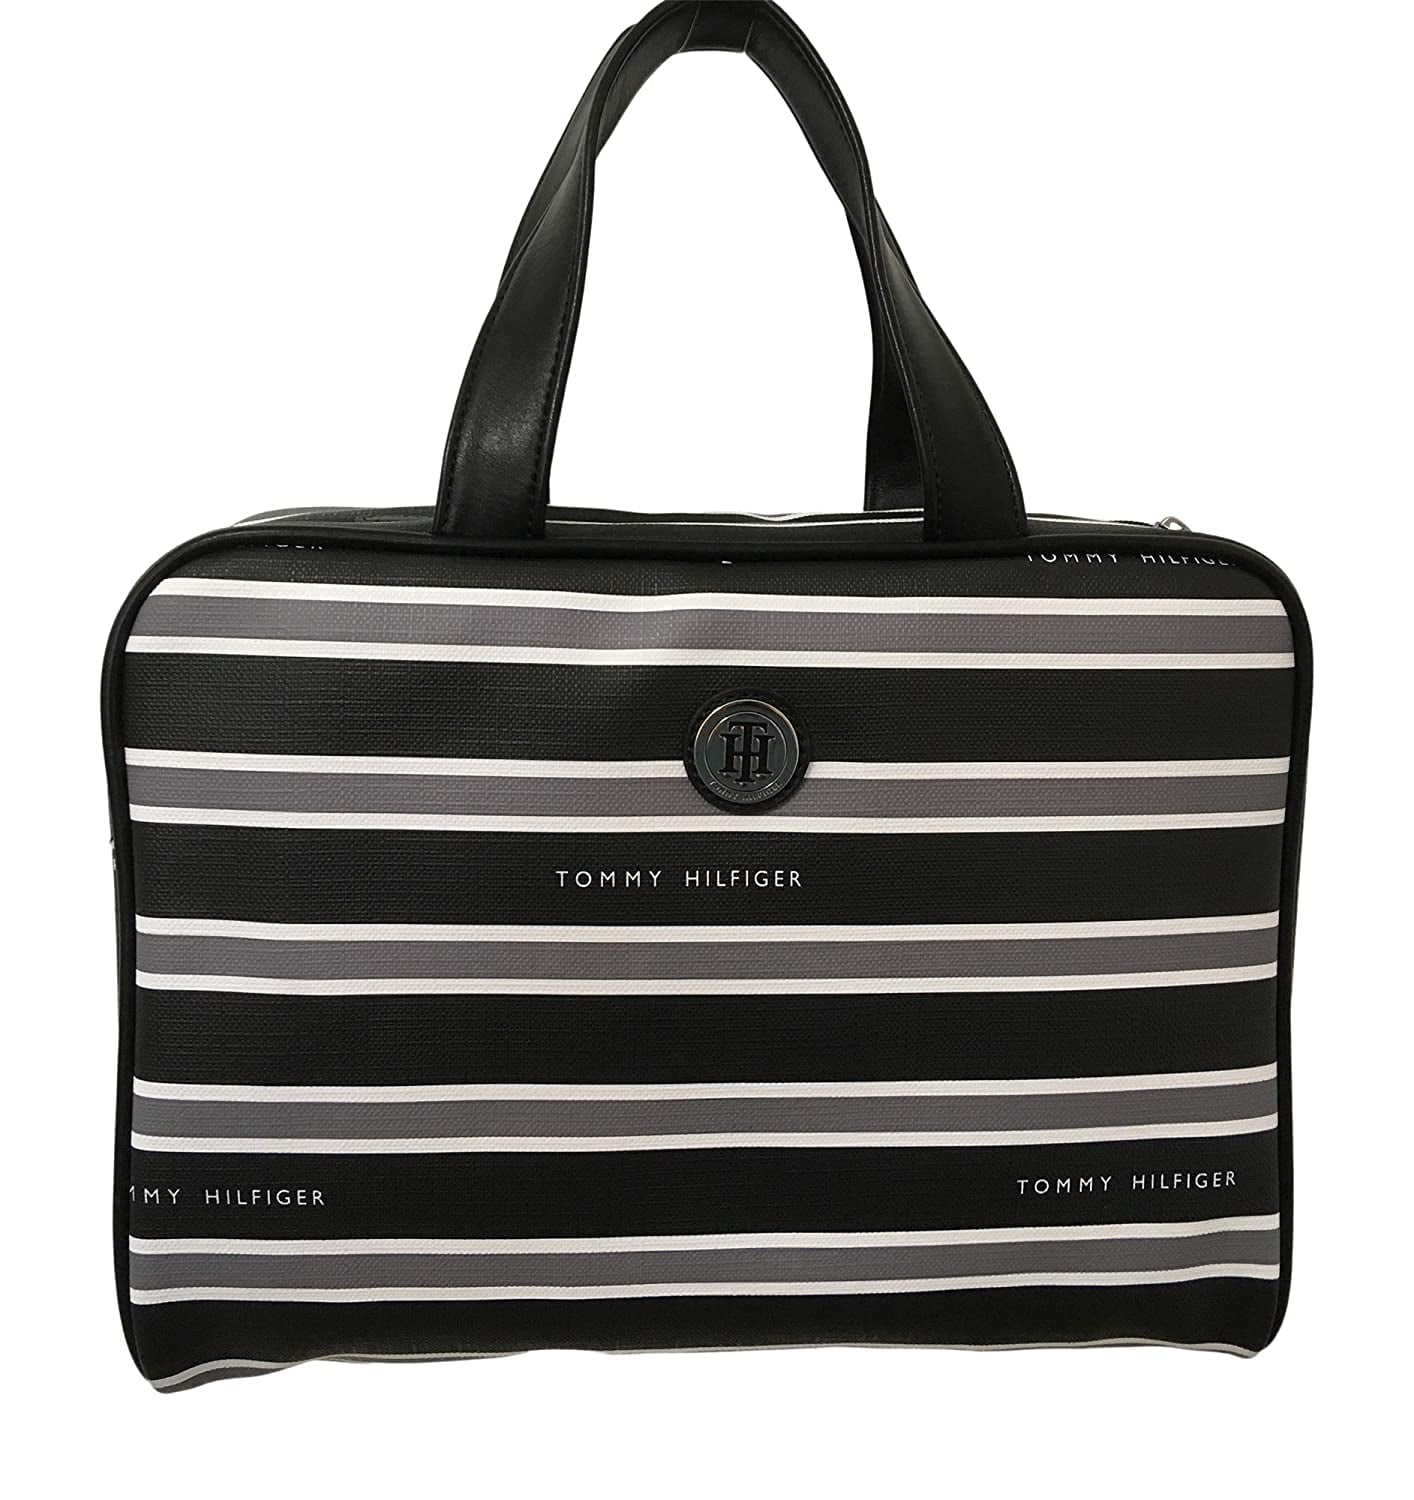 Tommy Hilfiger Folding Case Black and Travel Bag Organizer - Walmart.com